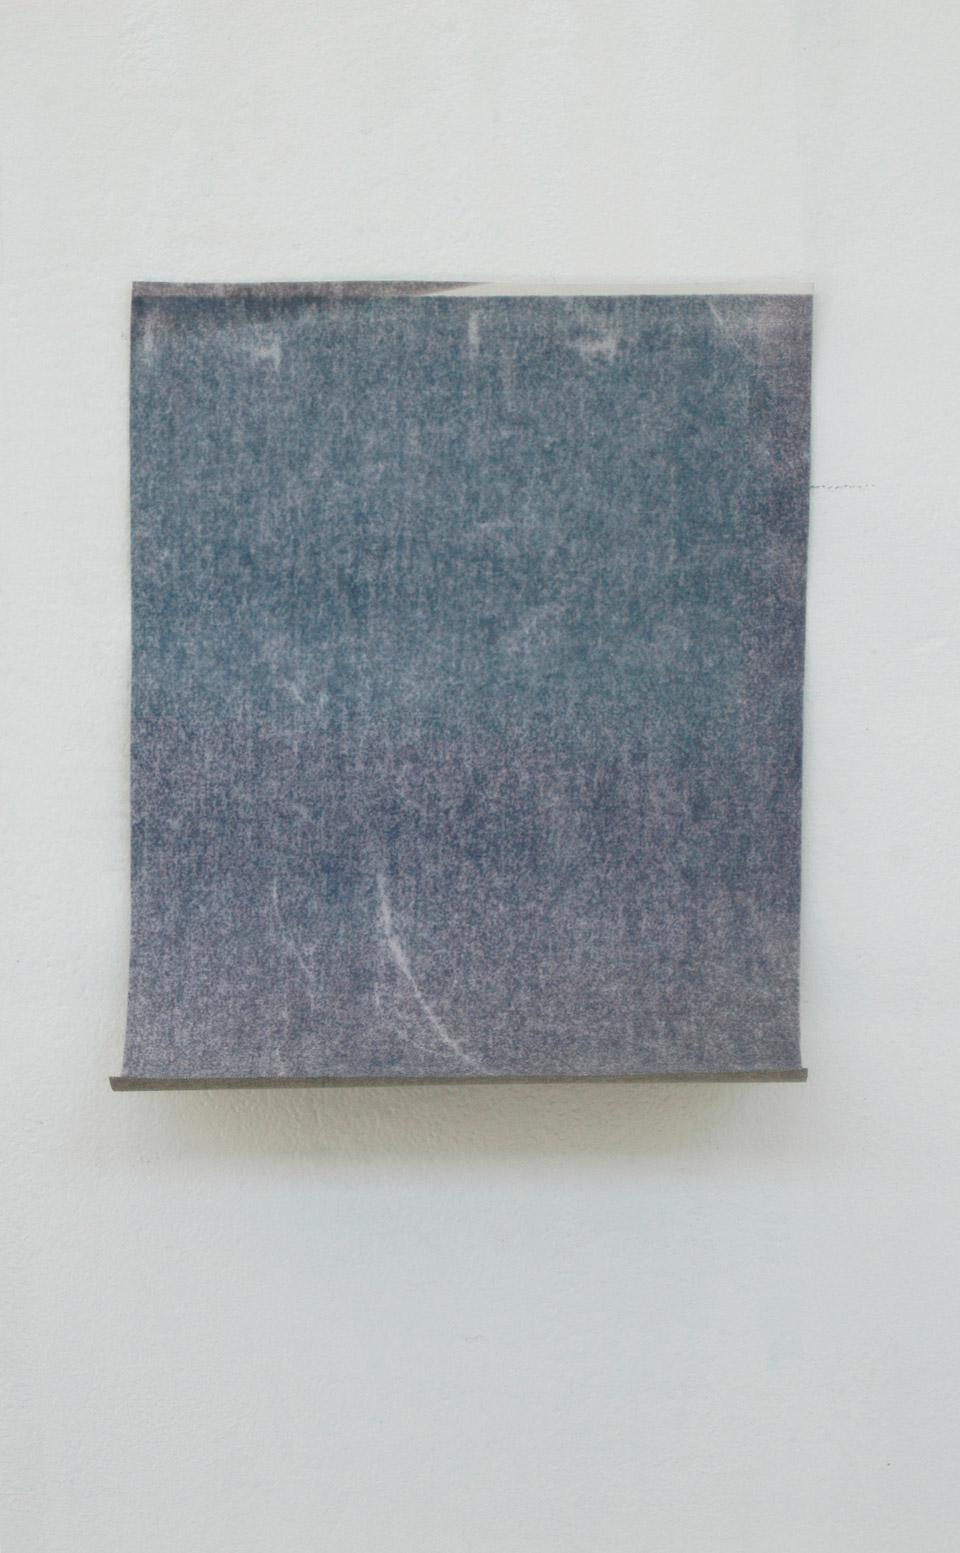 Untitled (23), 2012, inkjet print on canvas, A4